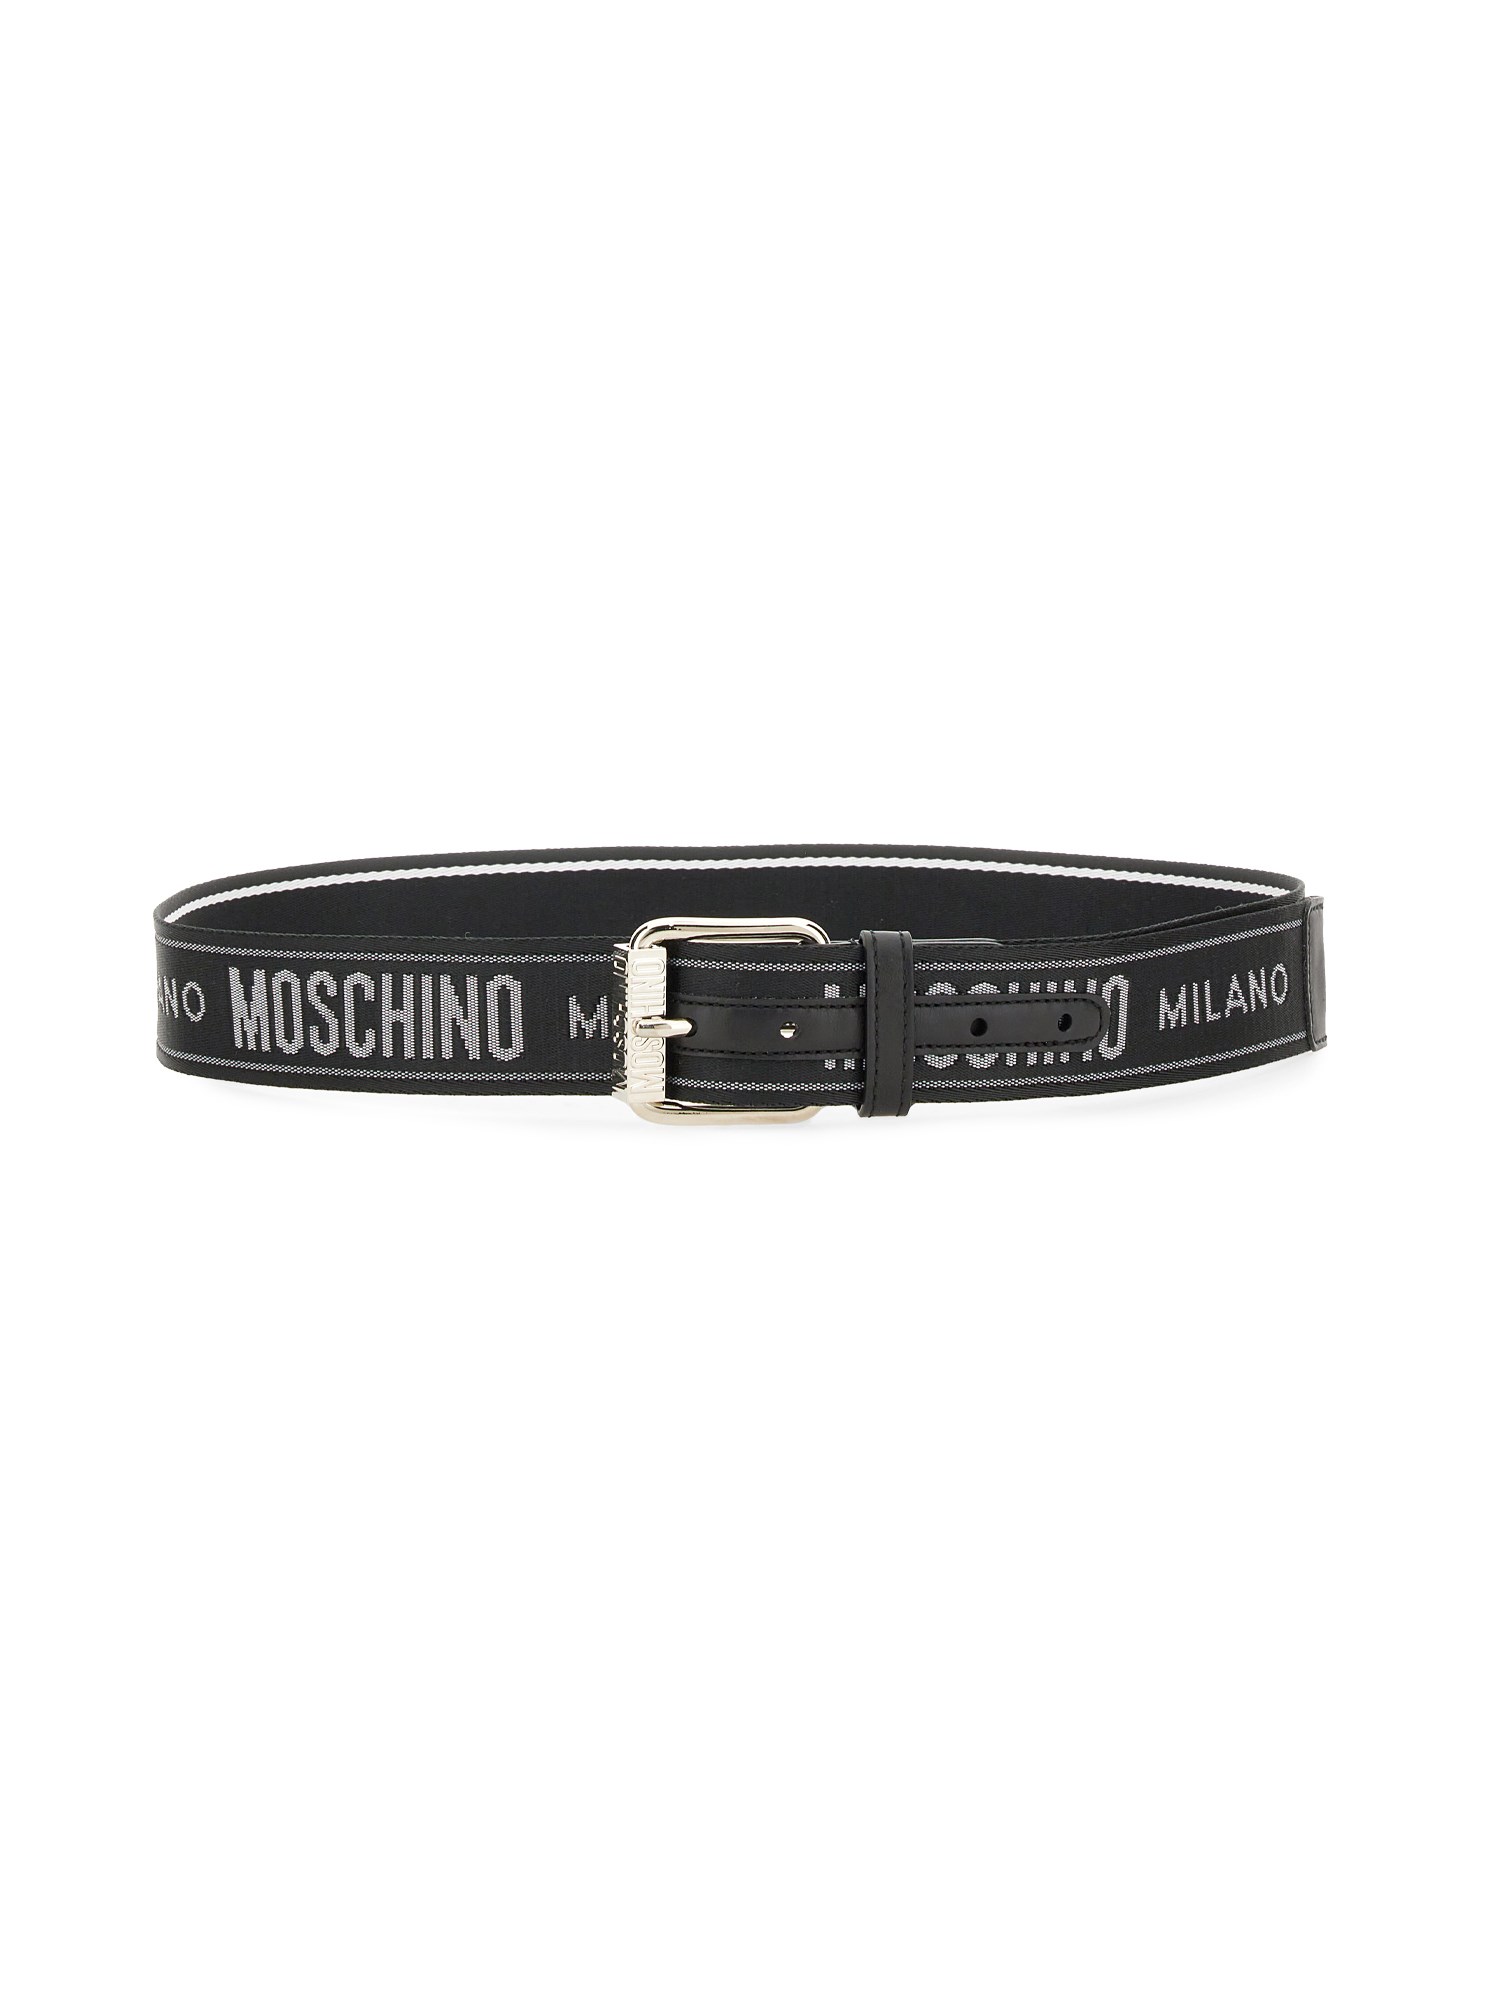 moschino belt with logo